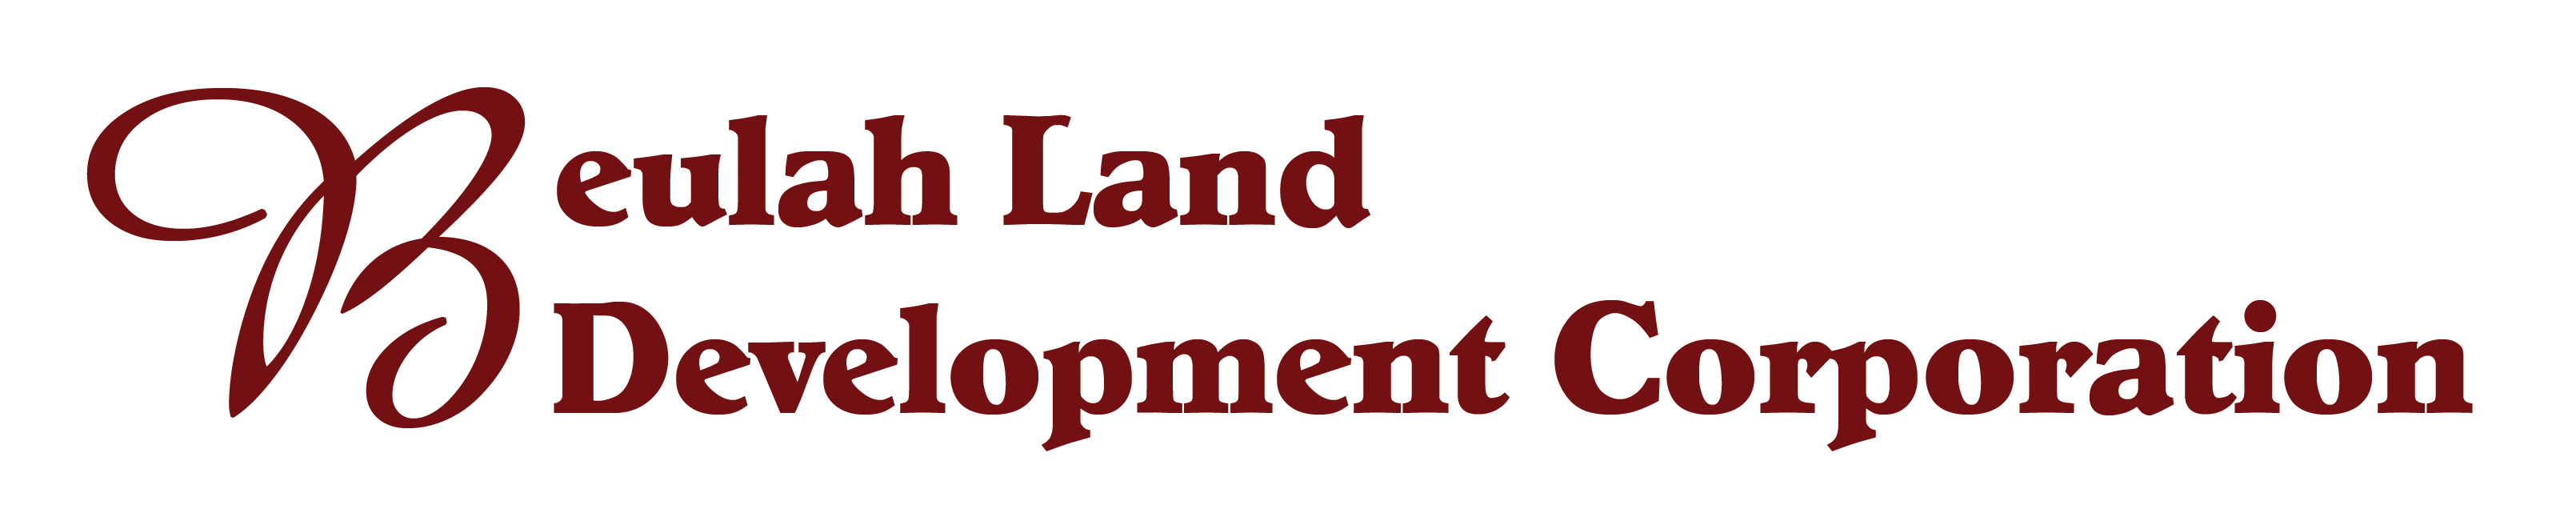 Beulah Land Development Corporation